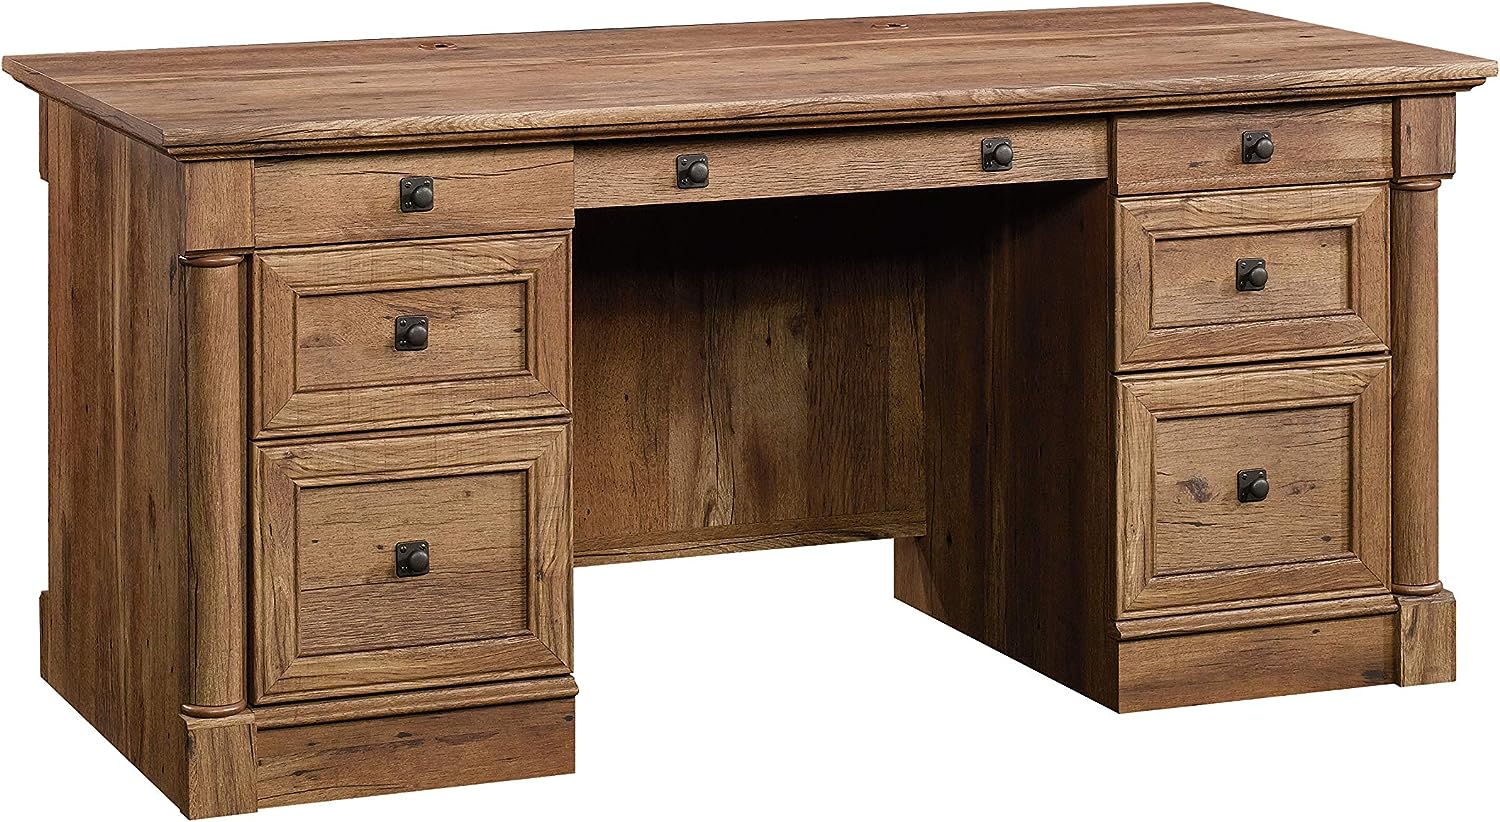 Sauder Palladia Executive Desk, Vintage Oak finish (2 Boxes) - $480